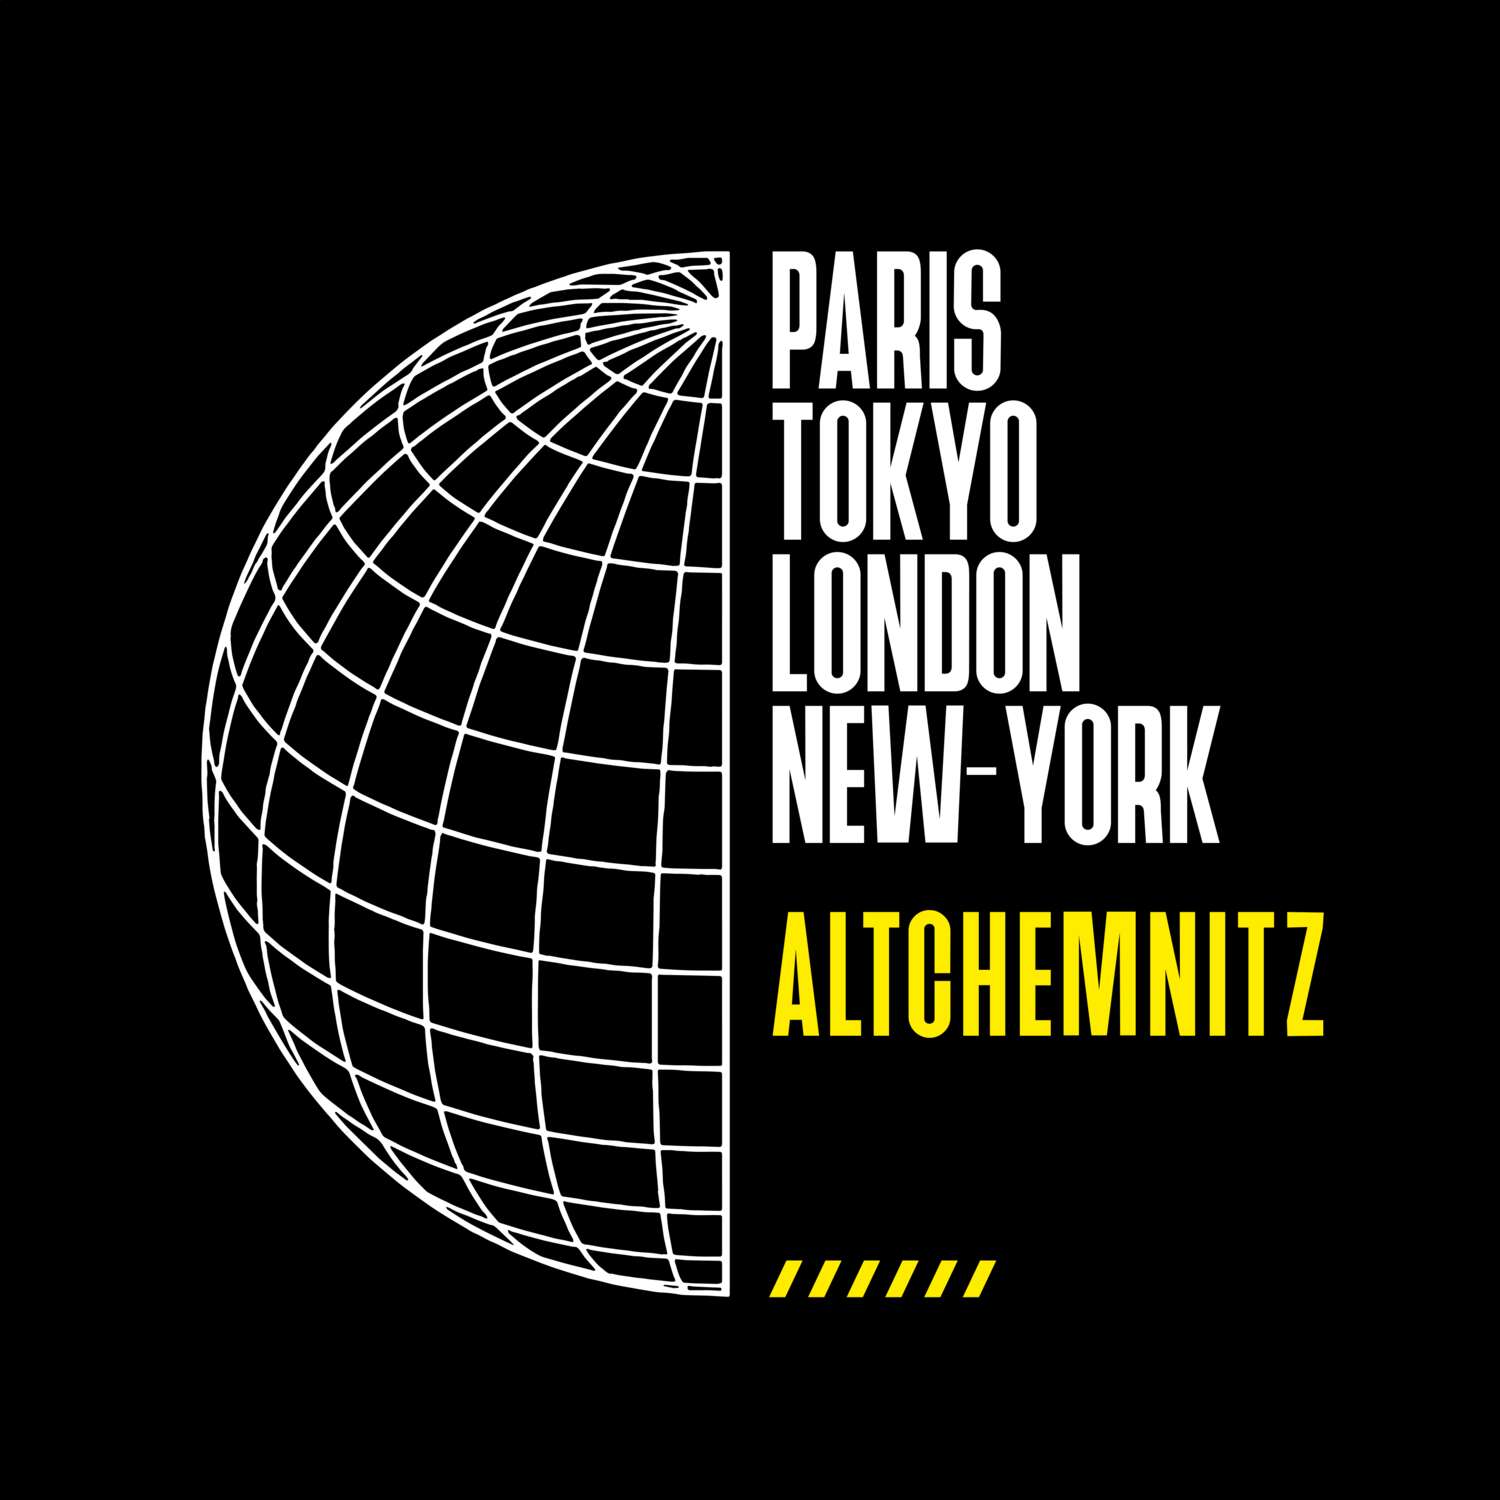 Altchemnitz T-Shirt »Paris Tokyo London«